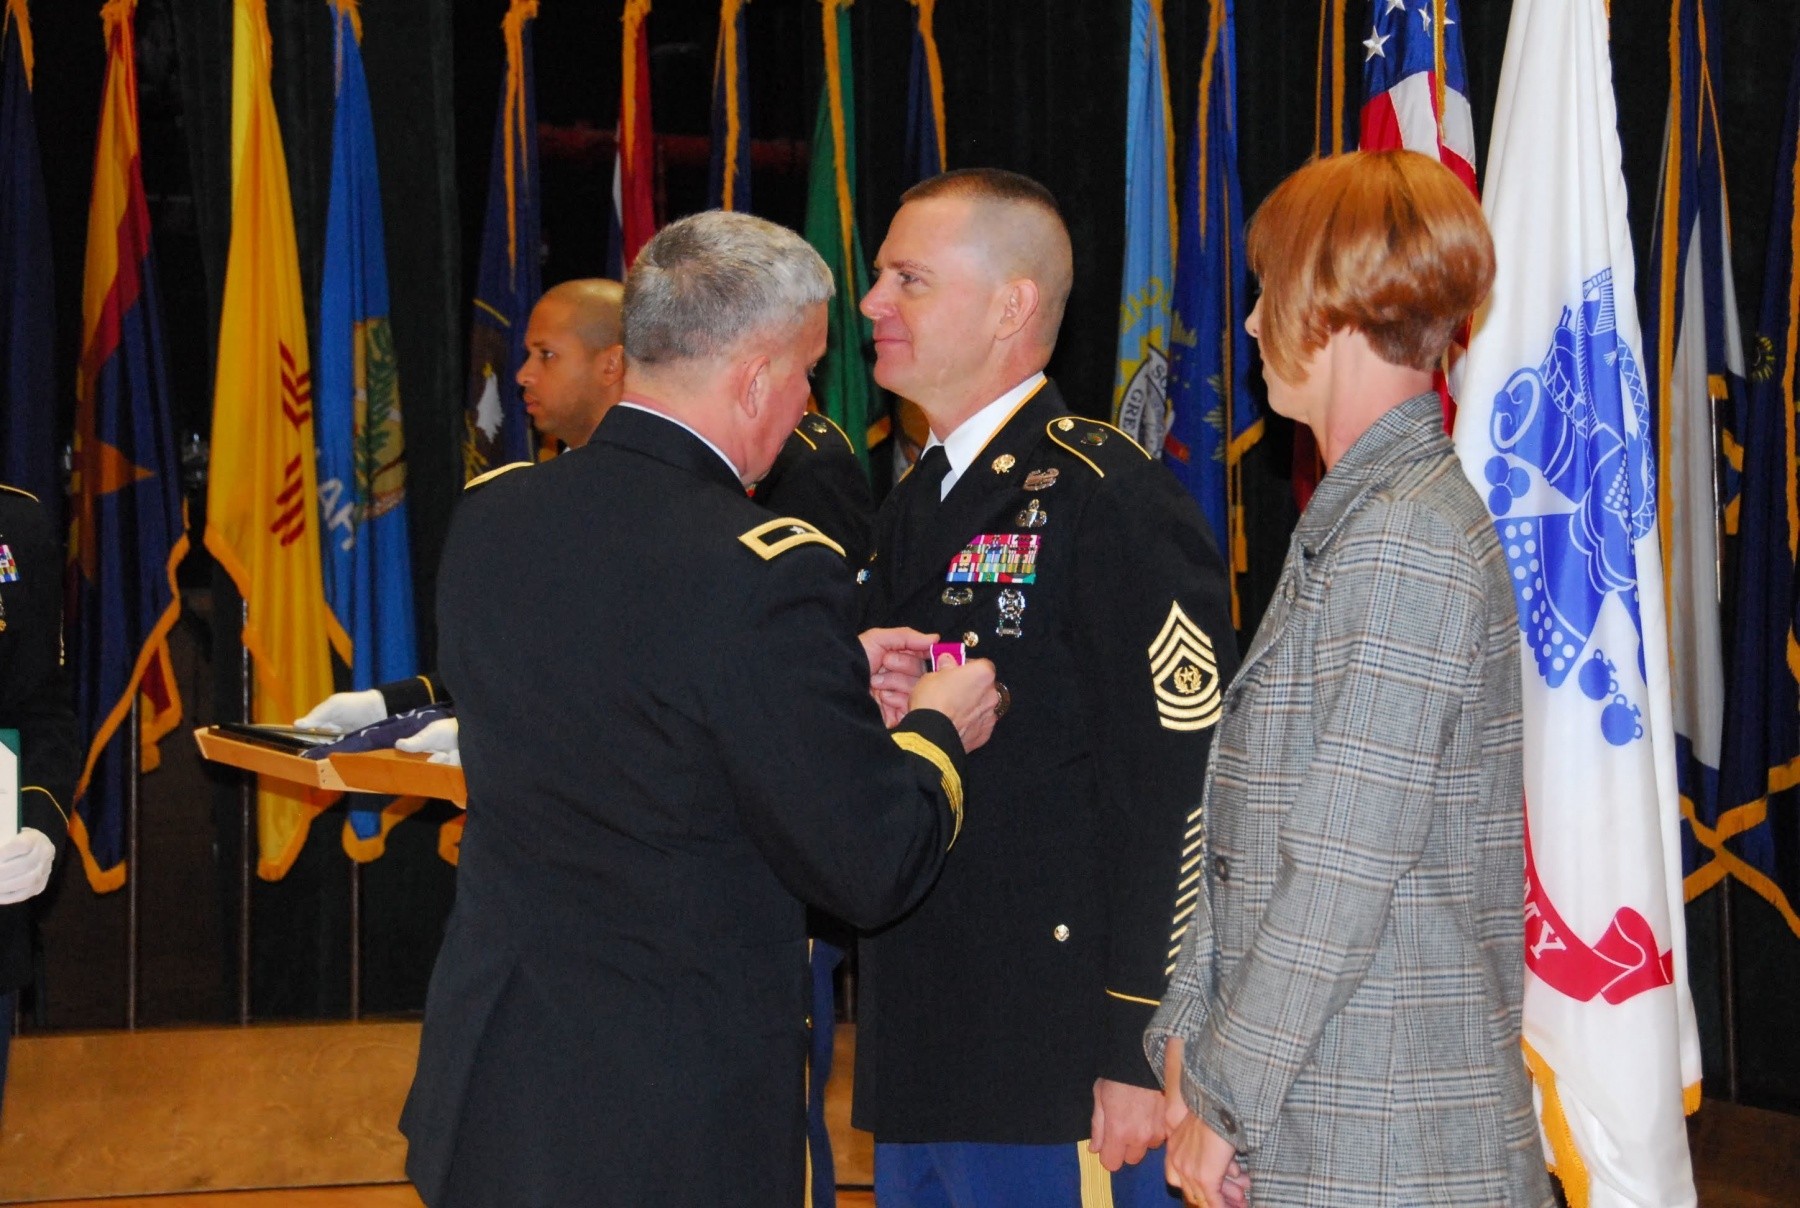 20th CBRNE Command new senior enlisted advisor, bids farewell